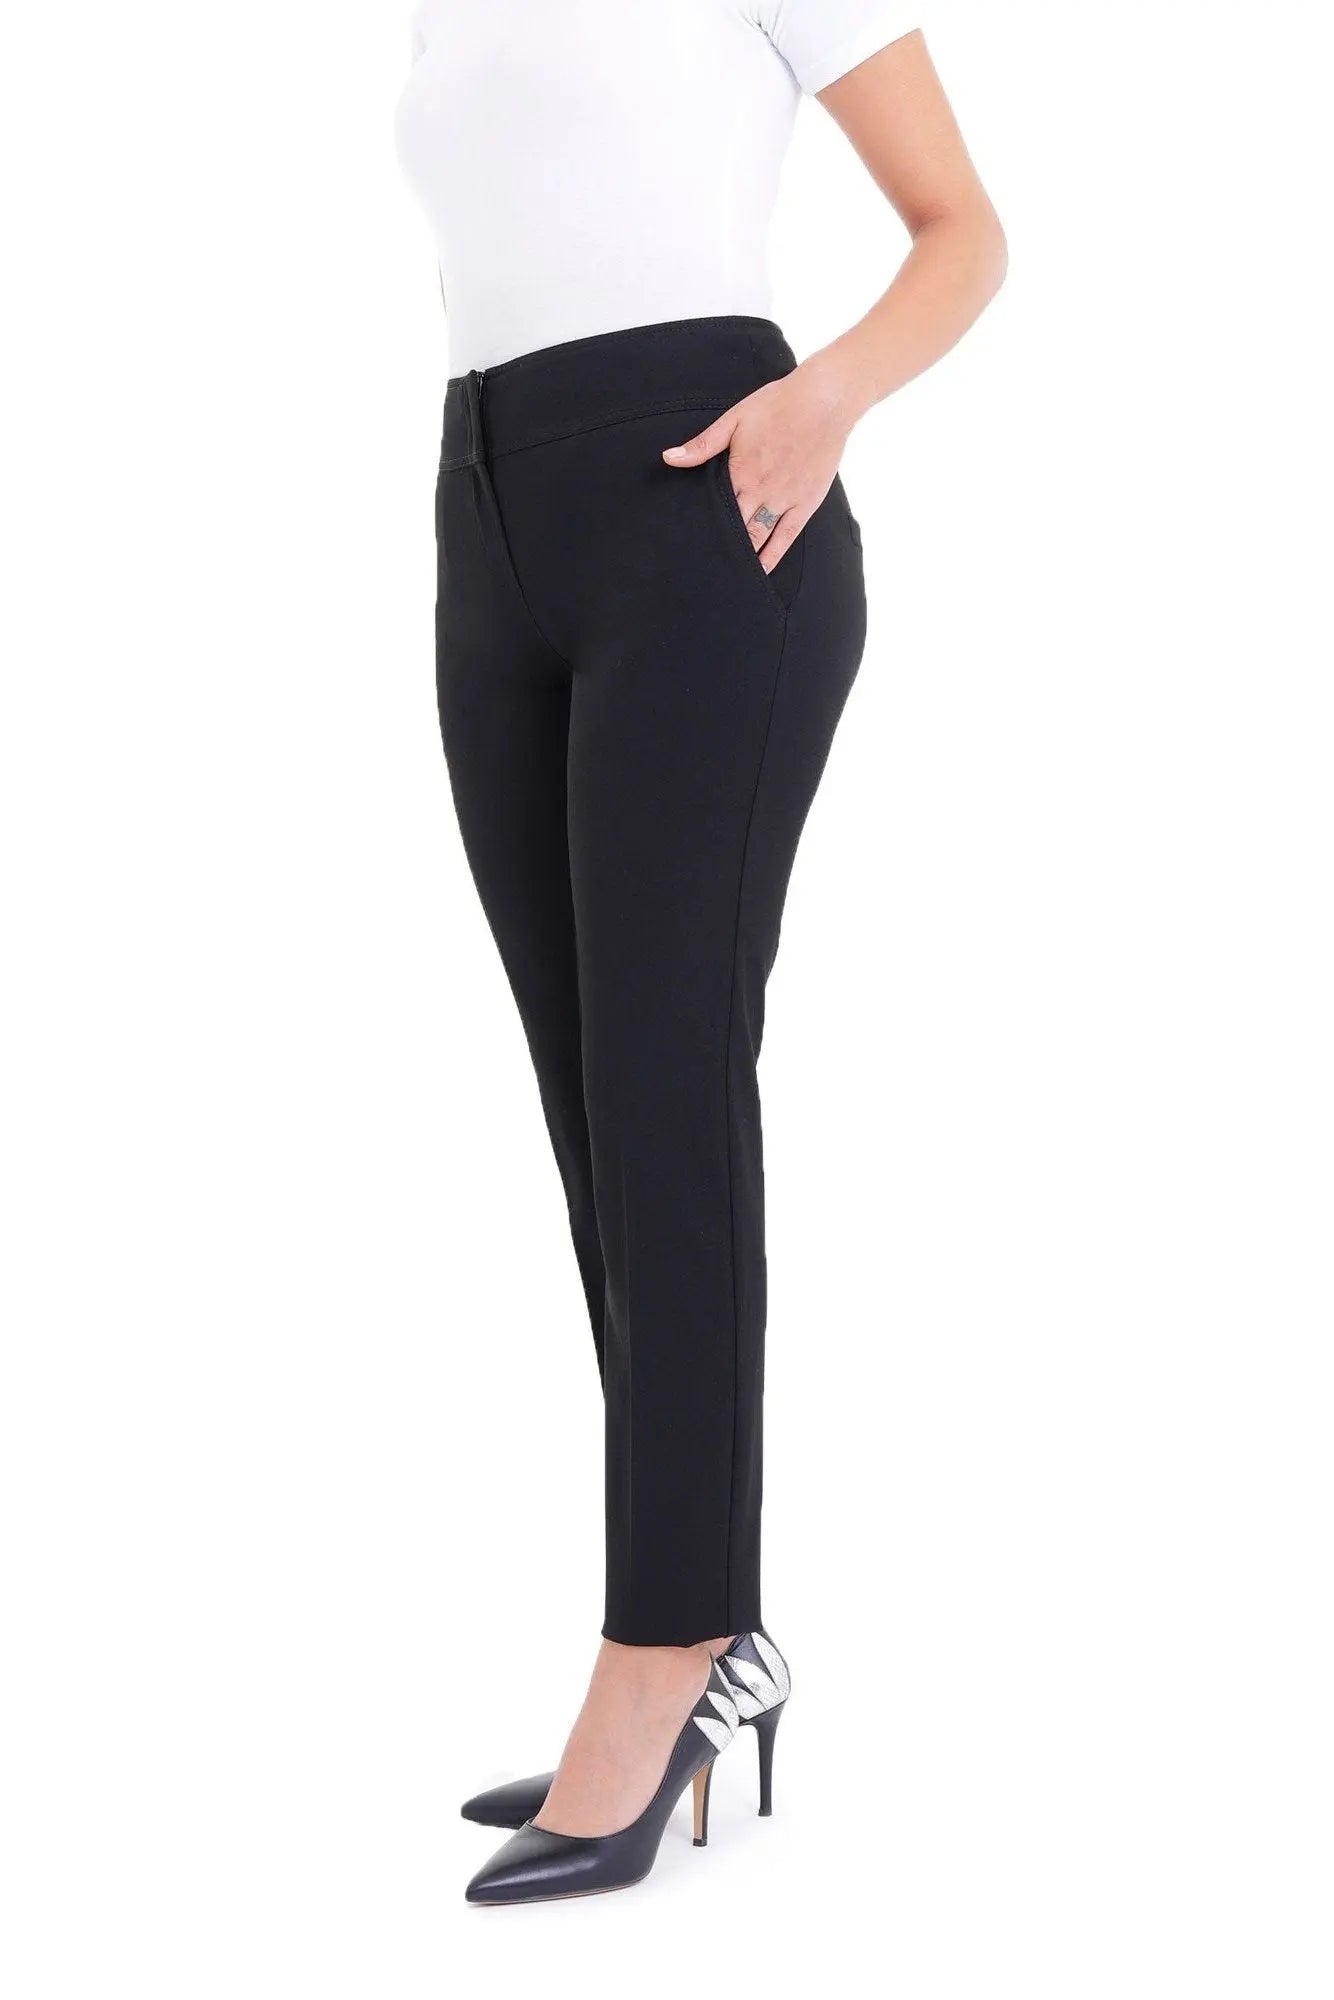 Dress Pants for Women Cigarette Pants Comfort High Waist Straight Leg Pants  (Black) Order Online, Casual Pants for Women